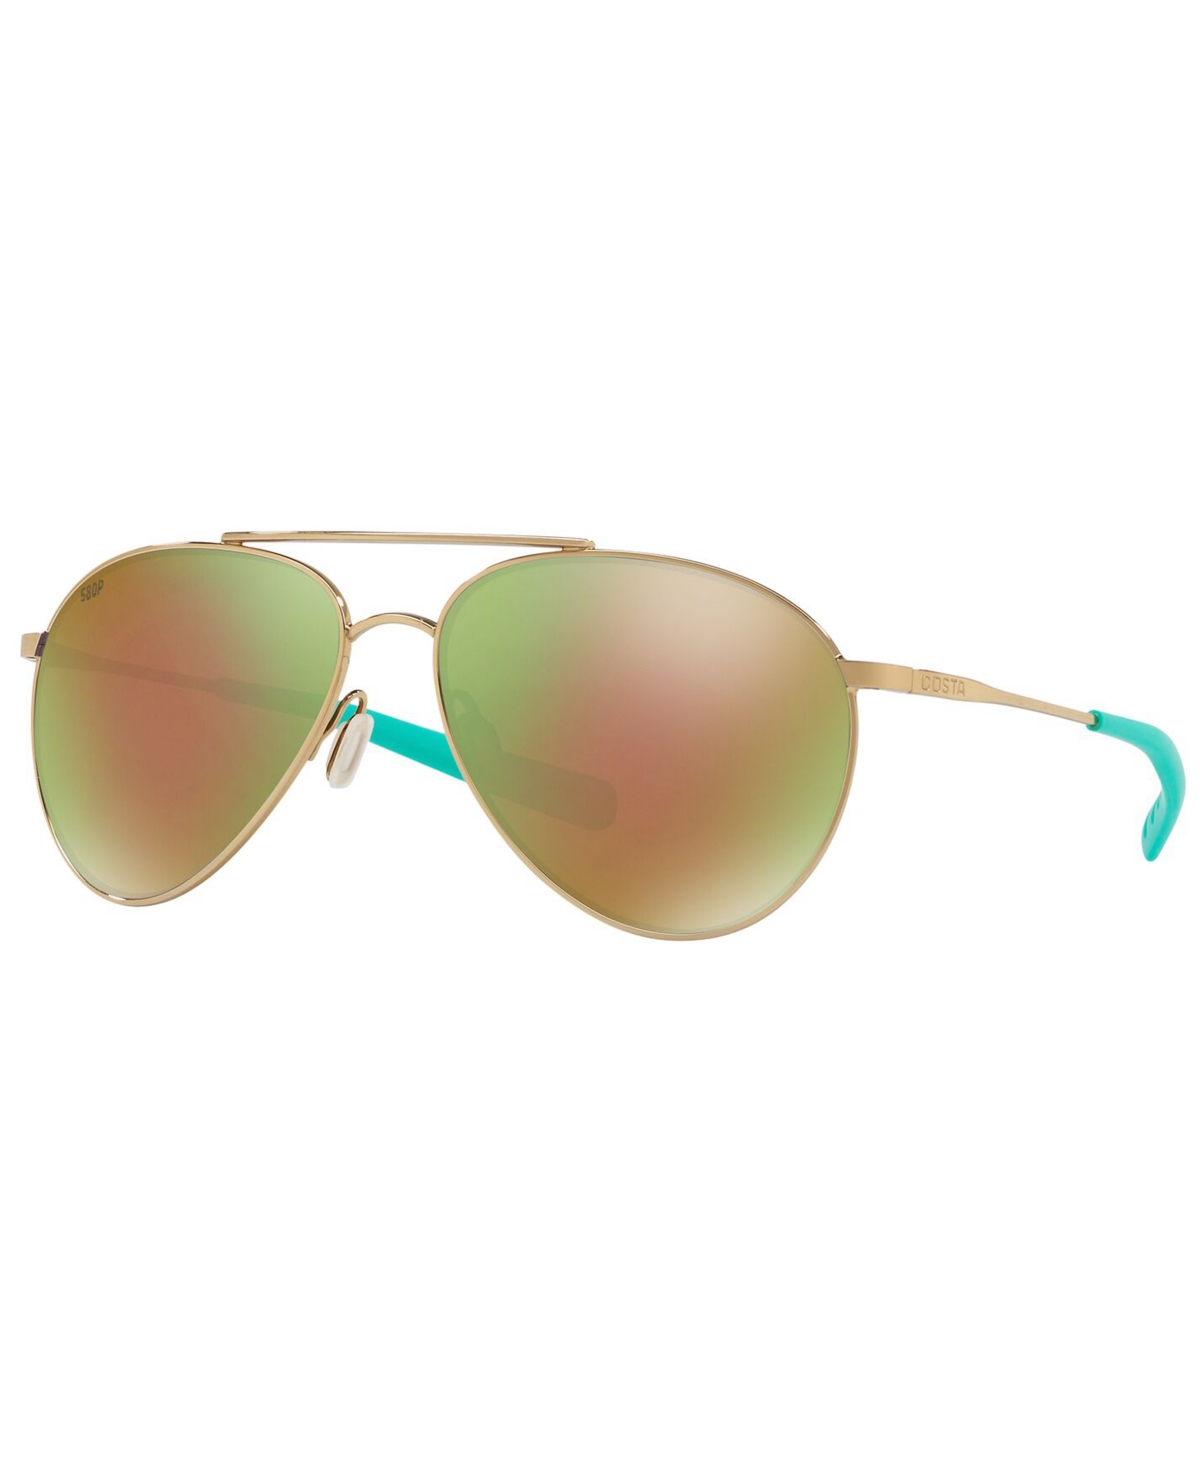 Unisex Polarized Sunglasses, 6S000246 - GOLD/GREEN MIR POL